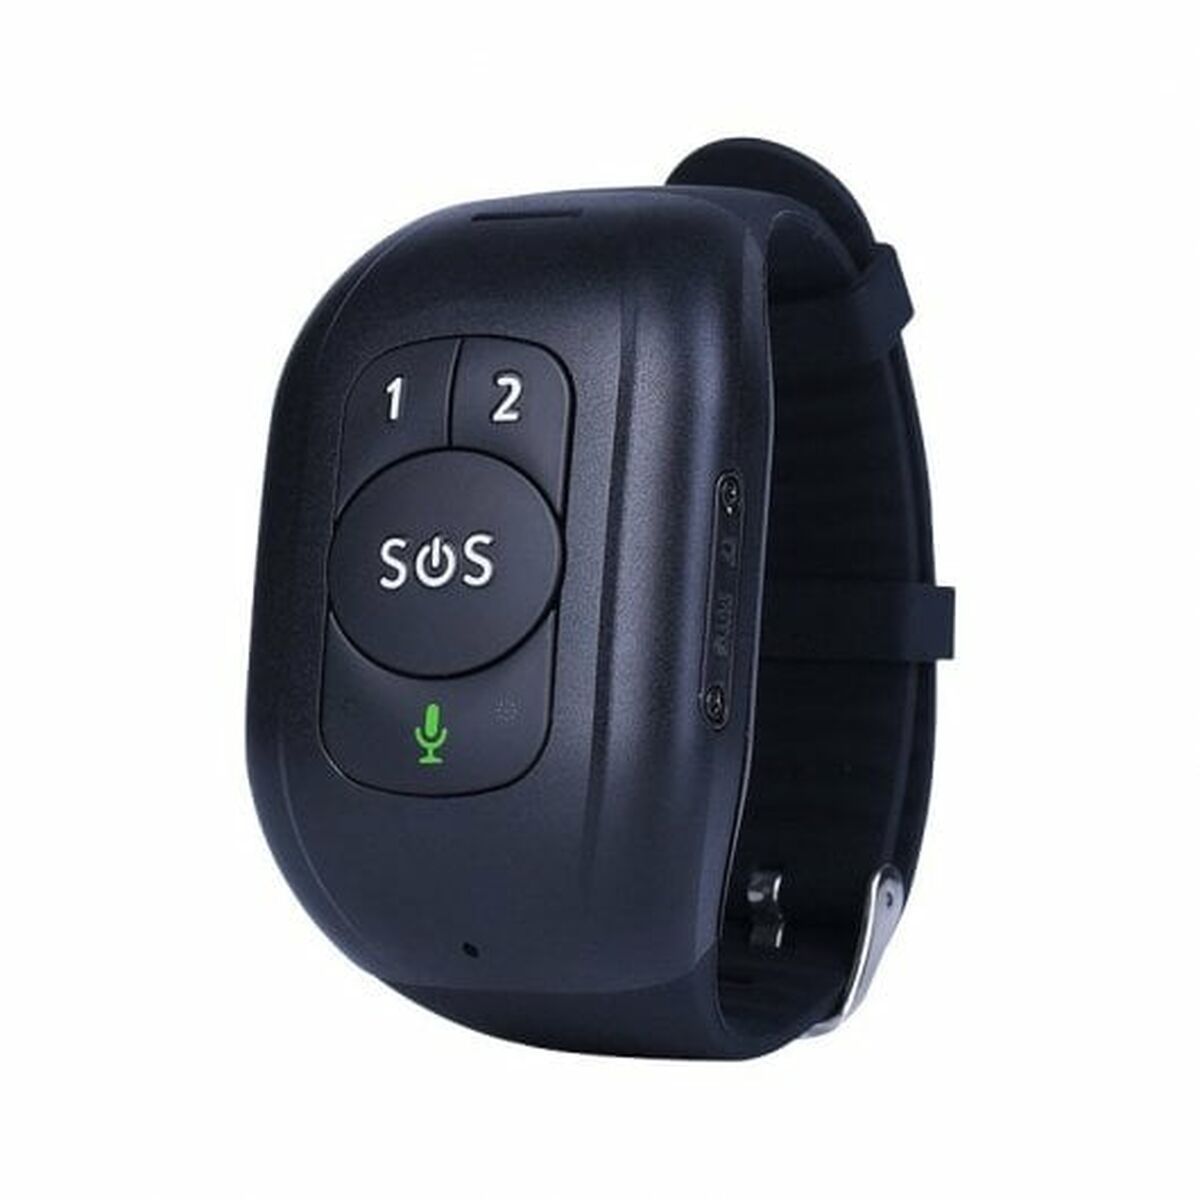 Kaufe Smartwatch LEOTEC LESB01K Schwarz bei AWK Flagship um € 75.00